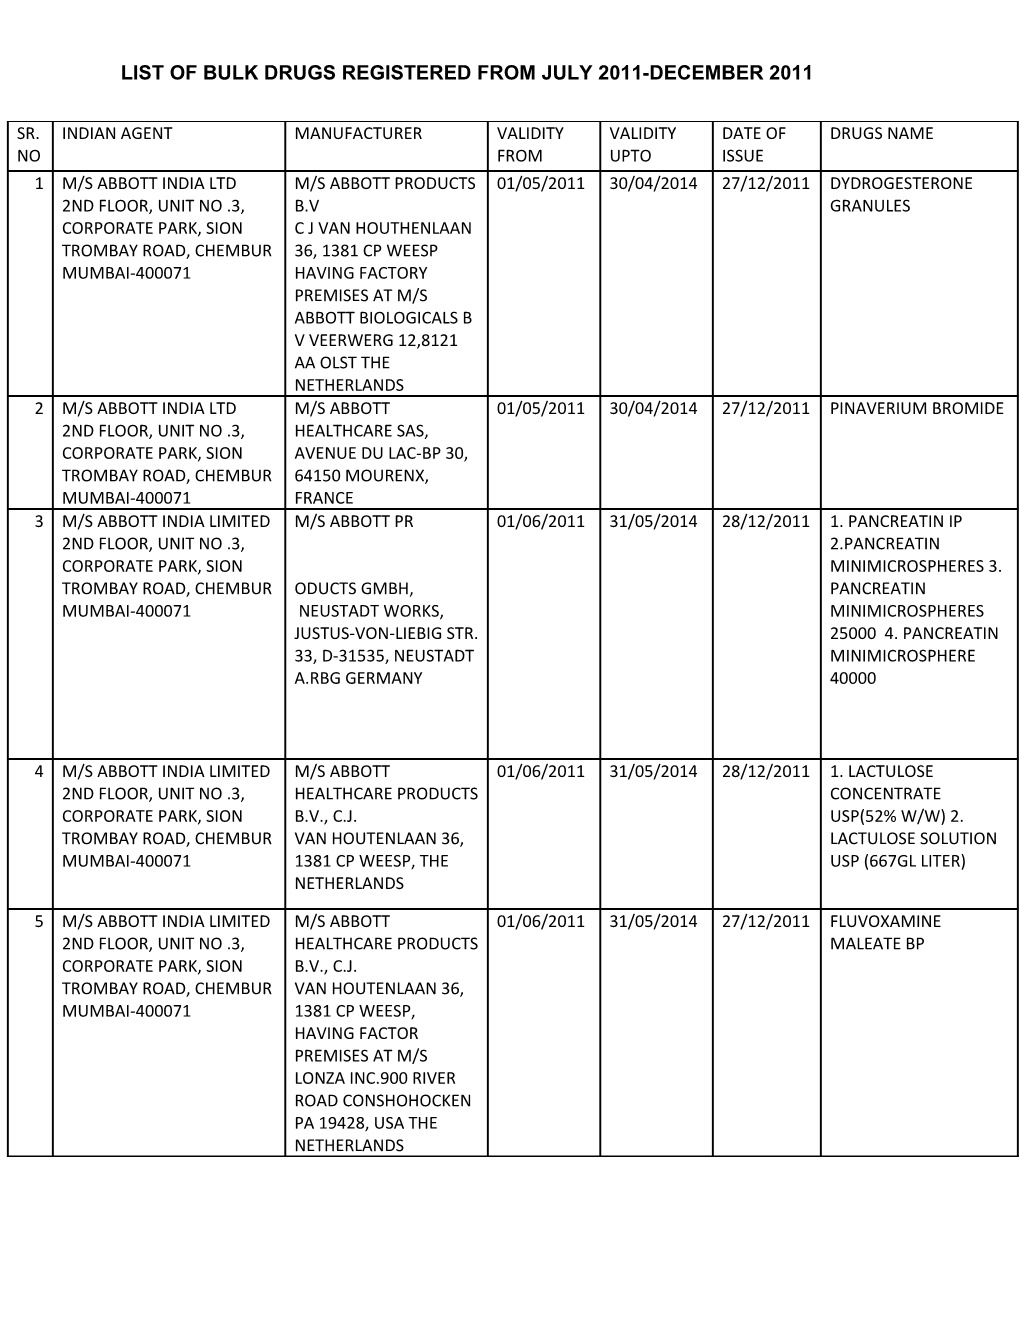 List Of Bulk Drugs Registered From July 2011 December 2011 Docest